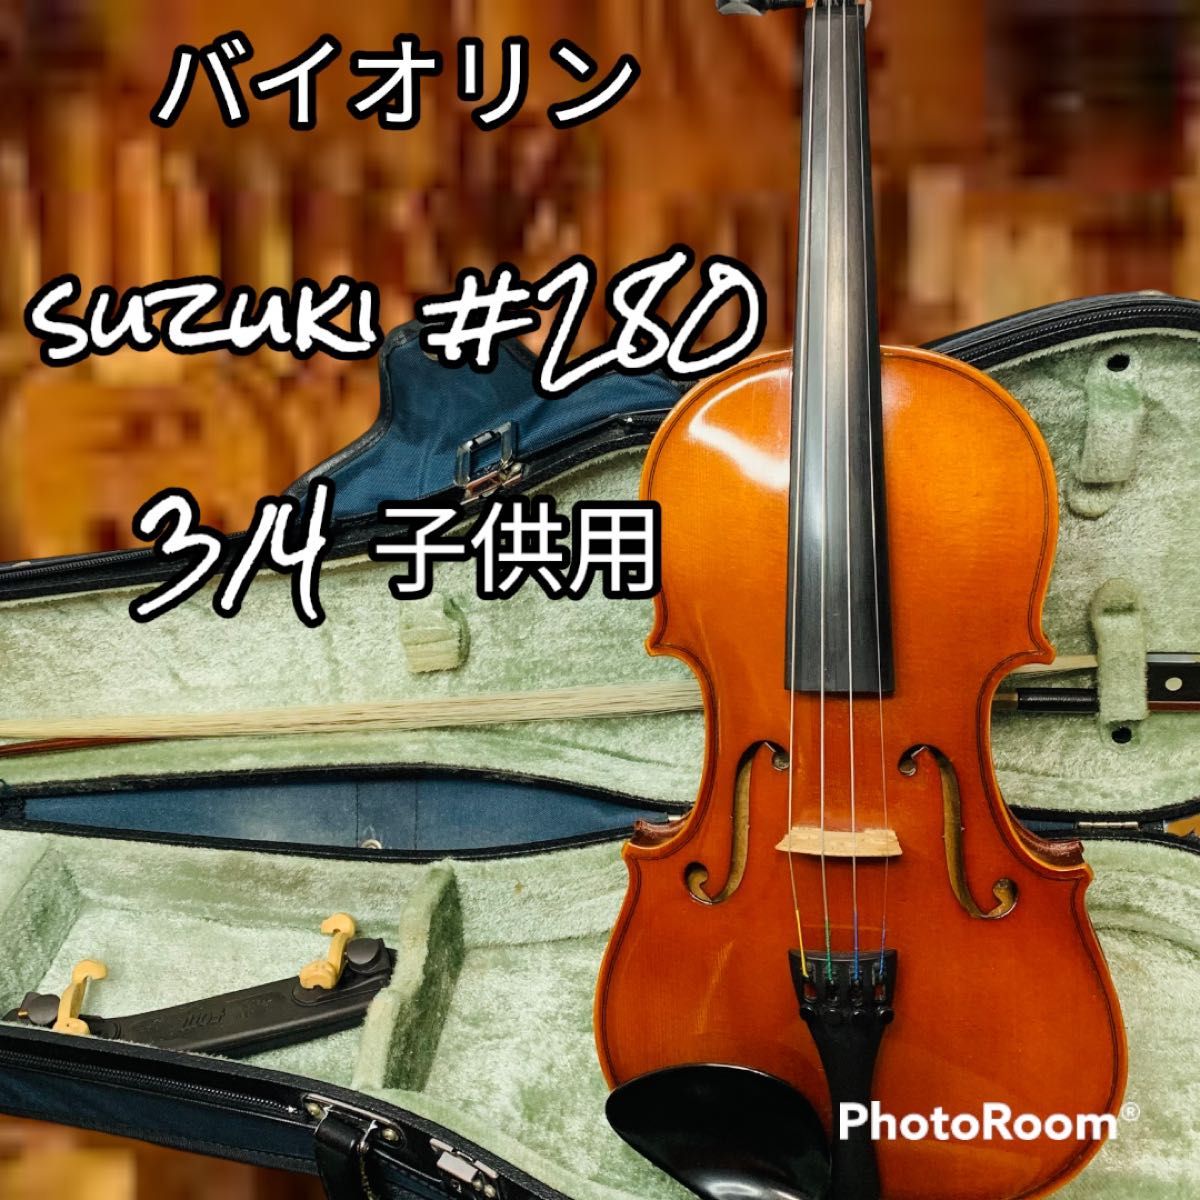 SUZUKI バイオリンNo 280 3/4 バイオリン 練習や子供用に｜PayPayフリマ